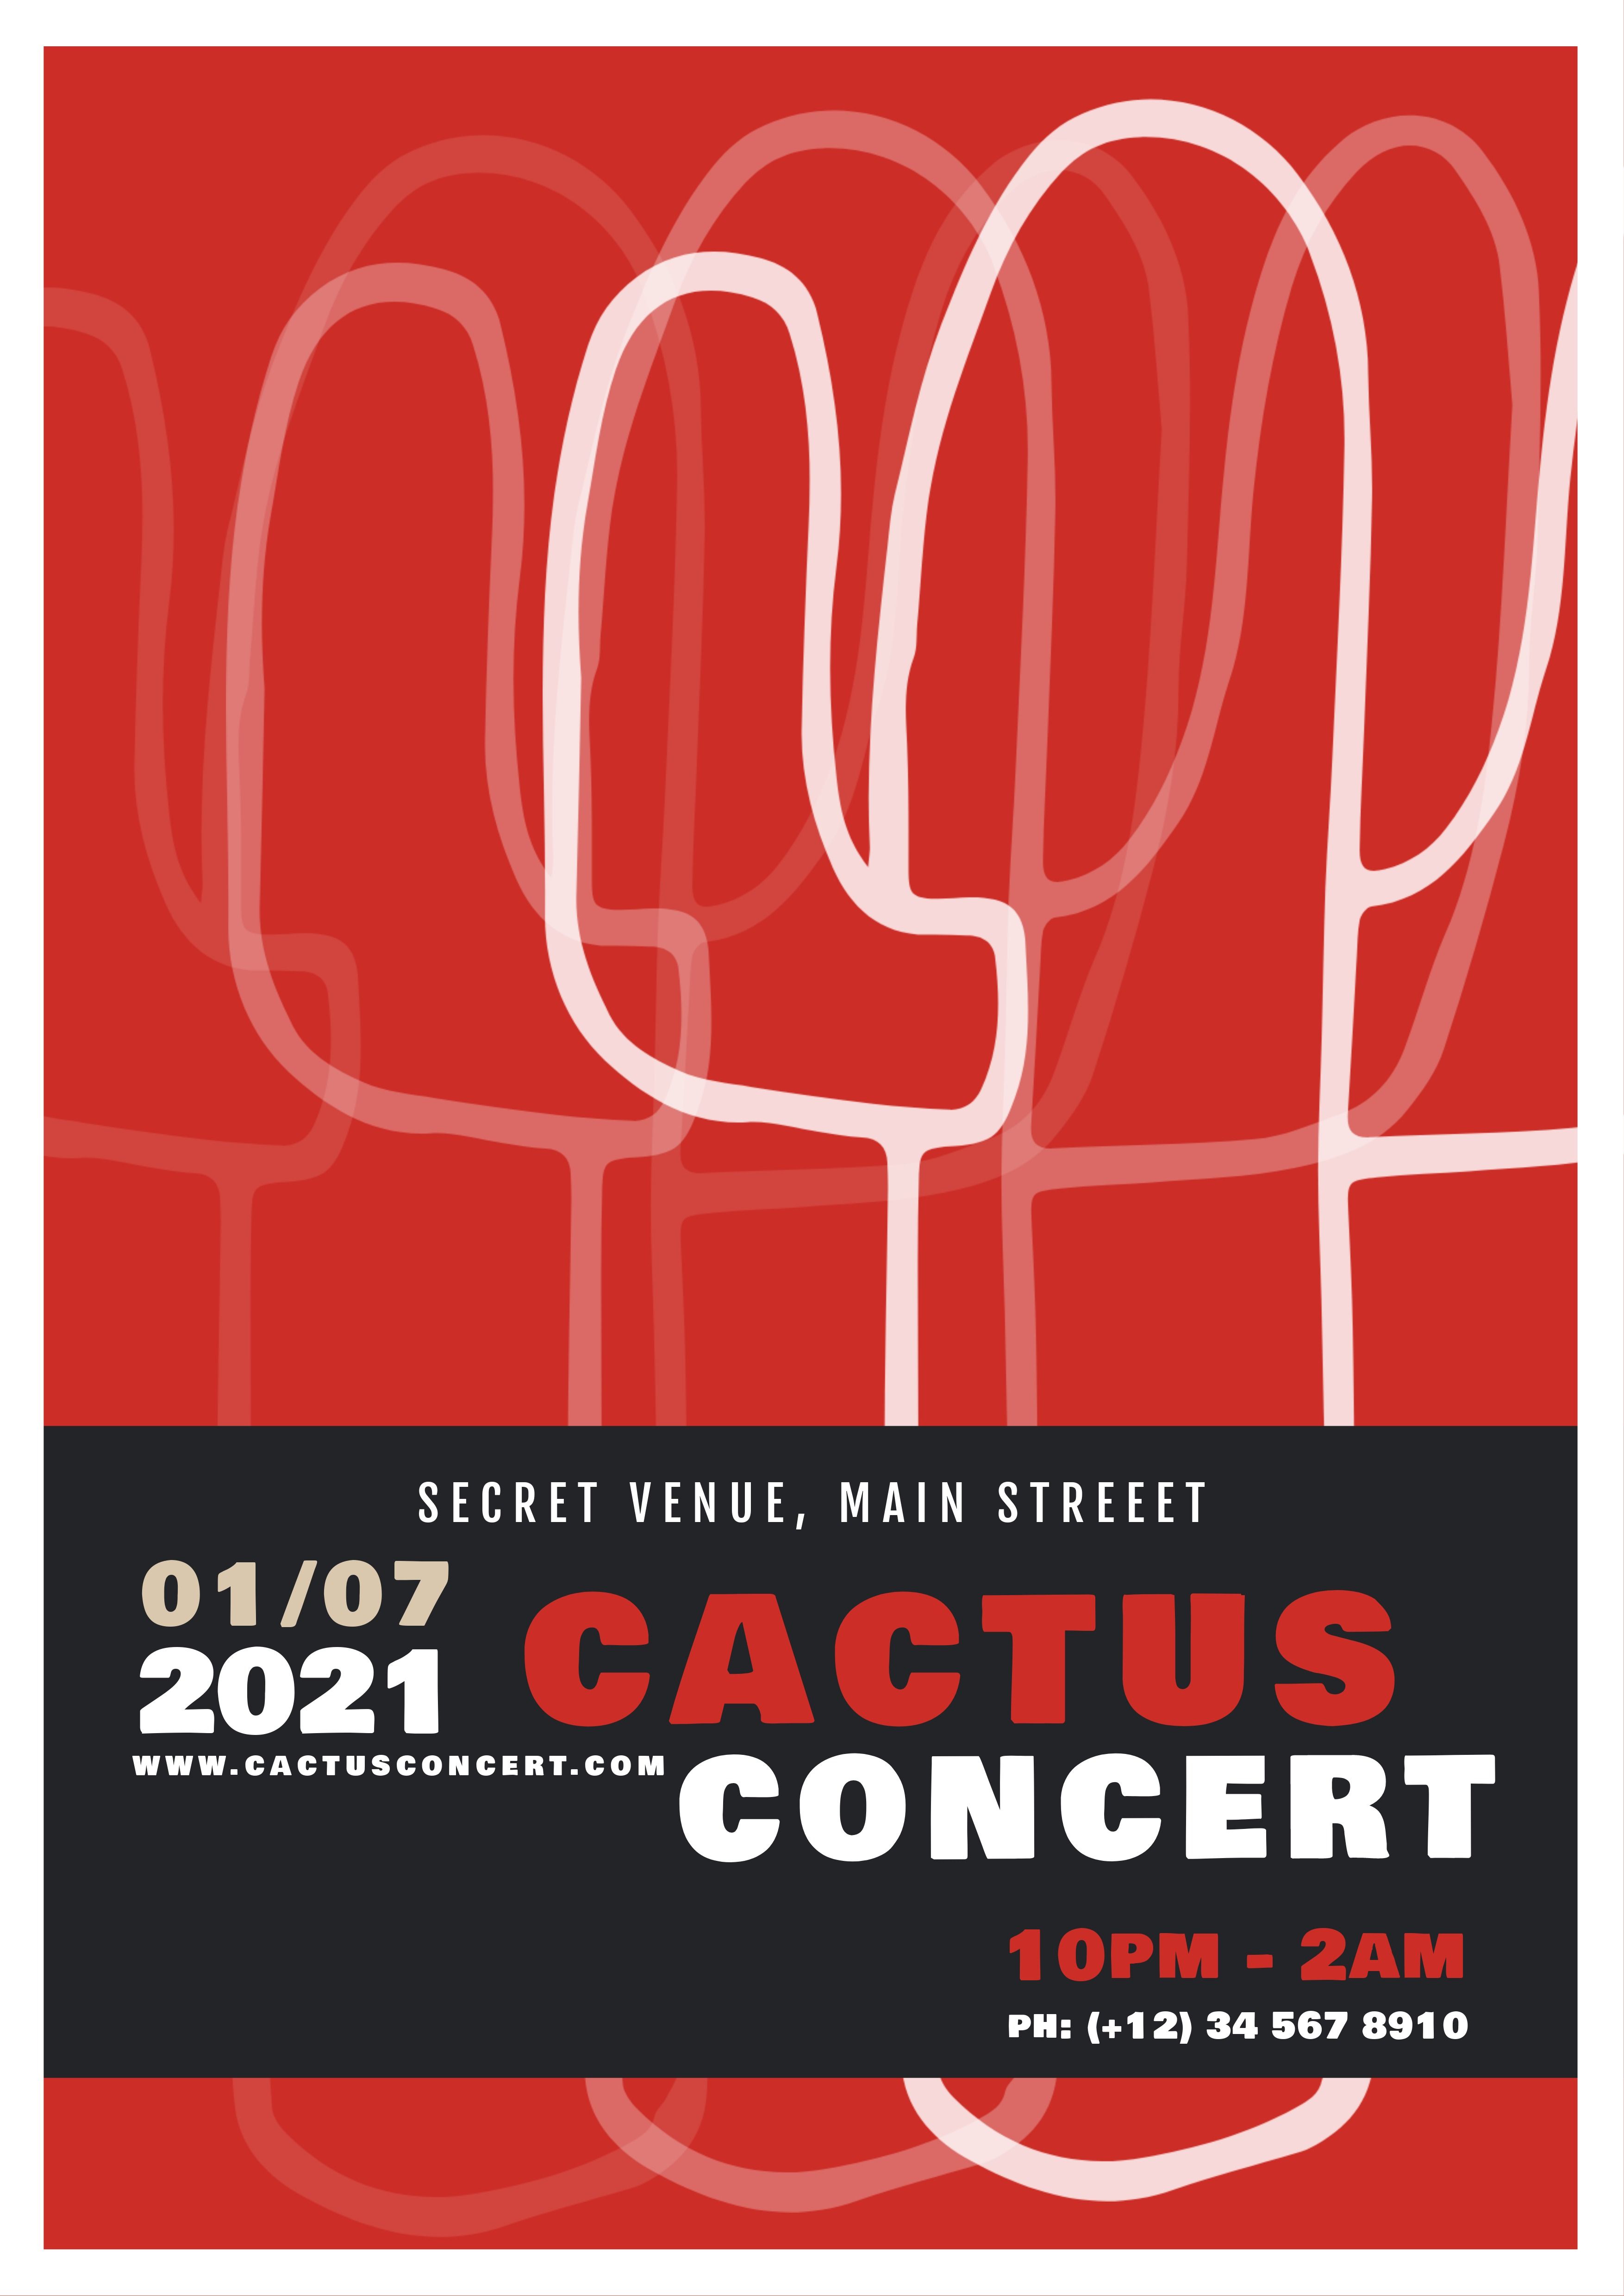 Cartaz do evento para concerto de rock